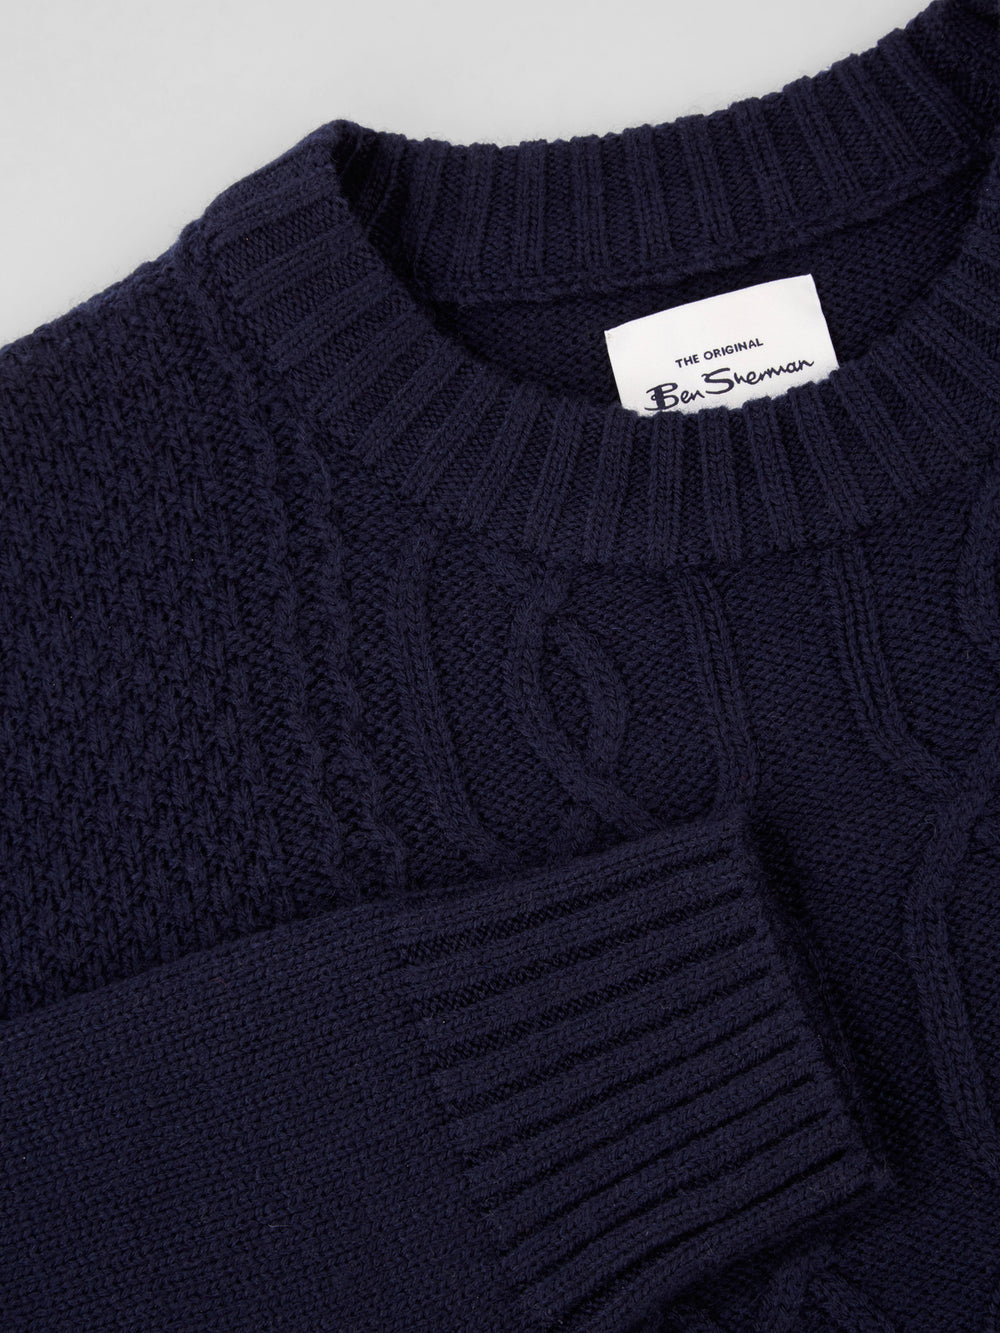 Cable-Knit Crewneck Sweater - Marine